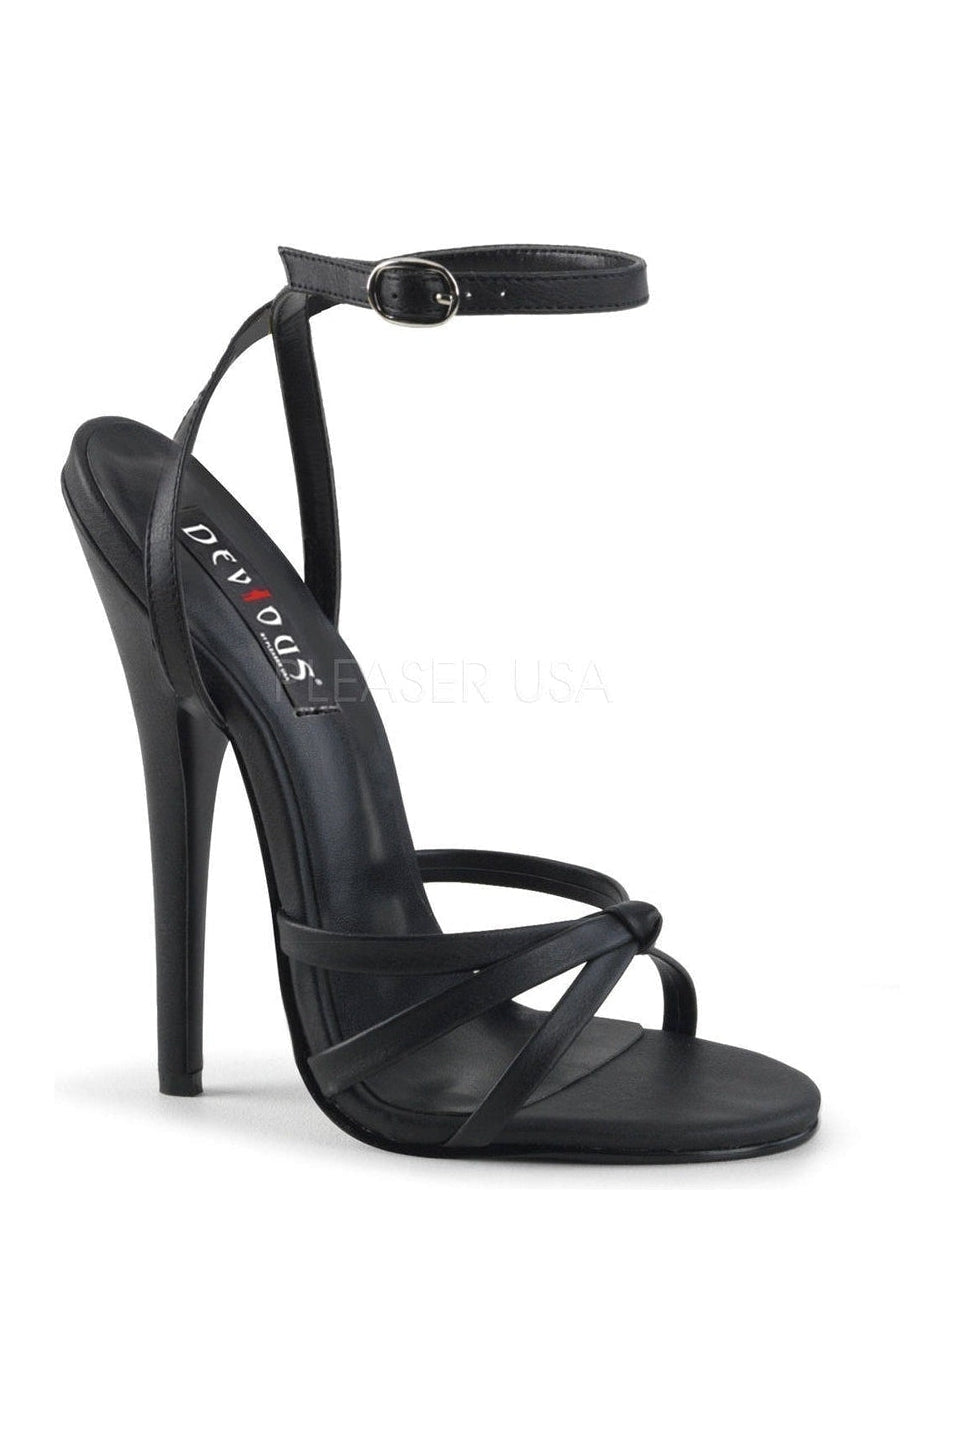 DOMINA-108 Sandal | Black Faux Leather-Sandals- Stripper Shoes at SEXYSHOES.COM